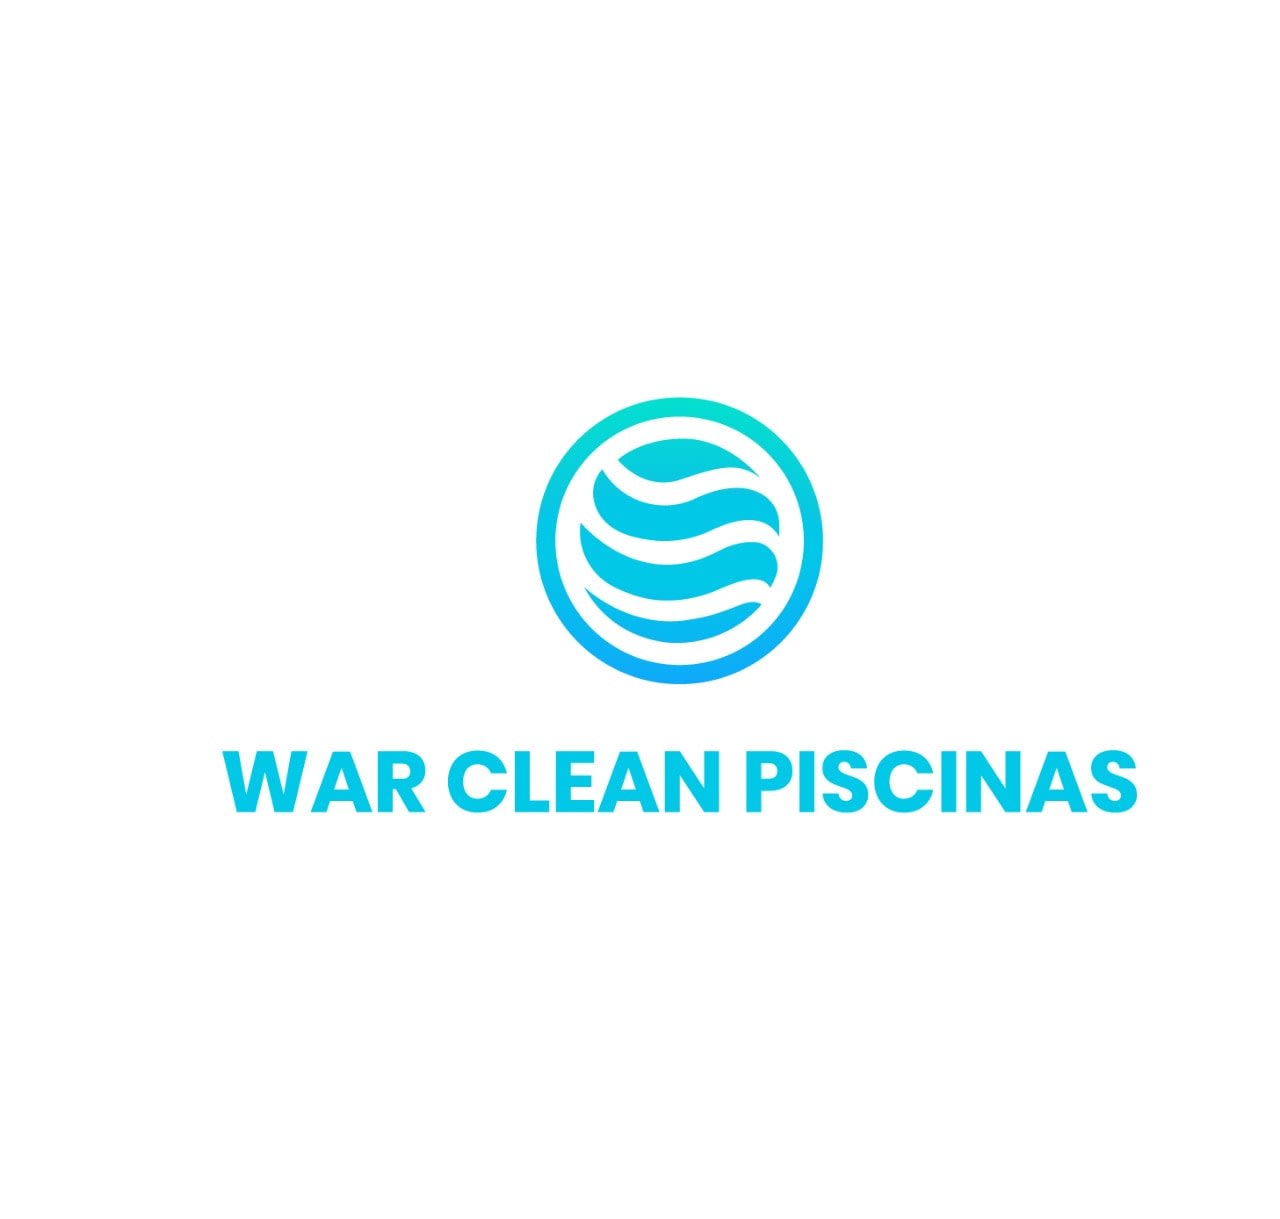 War Clean Piscinas